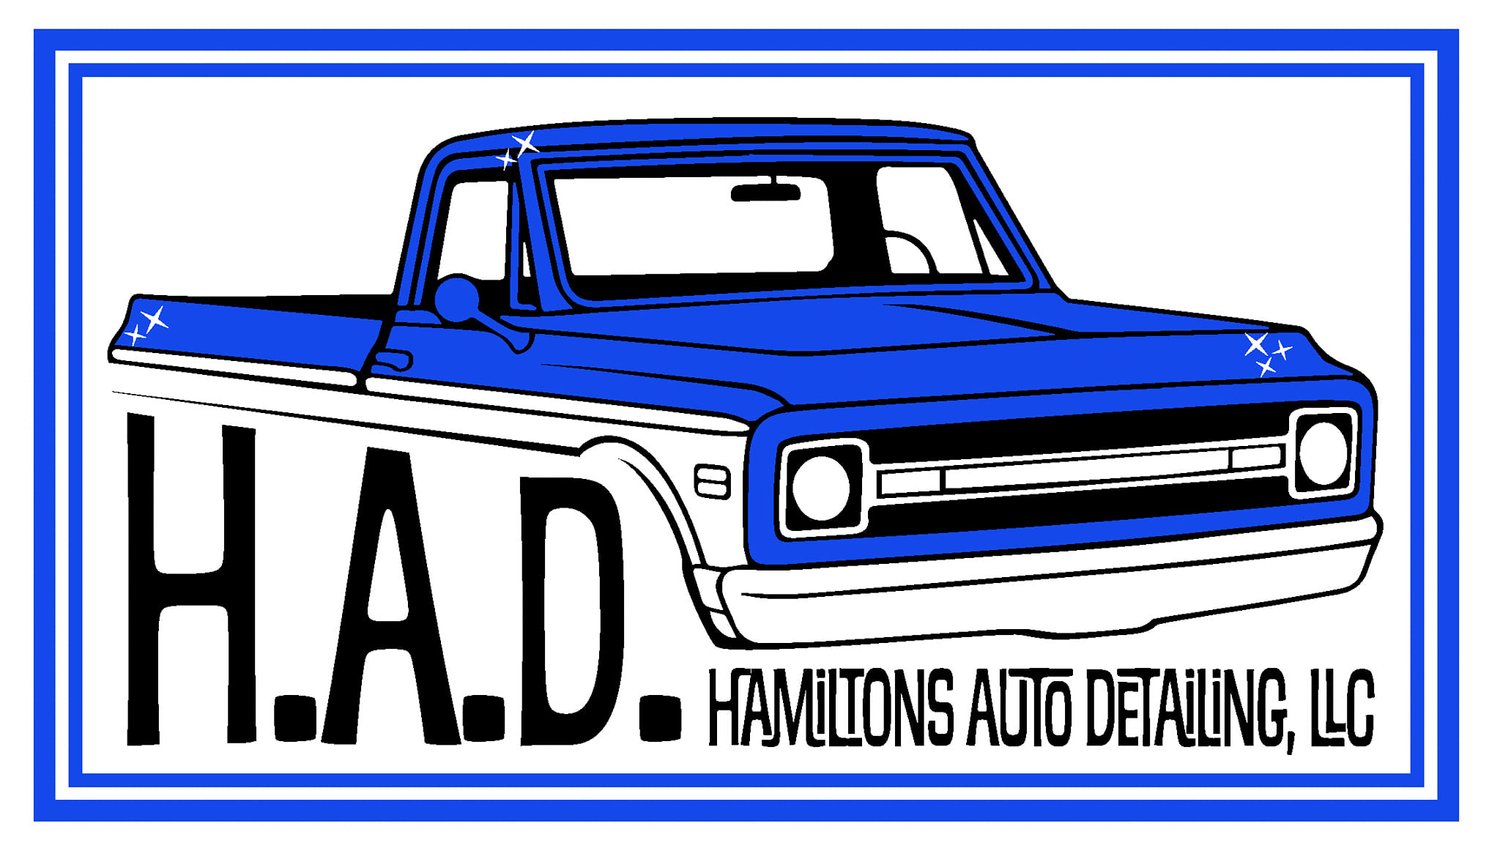 Hamiltons Auto Detailing, LLC